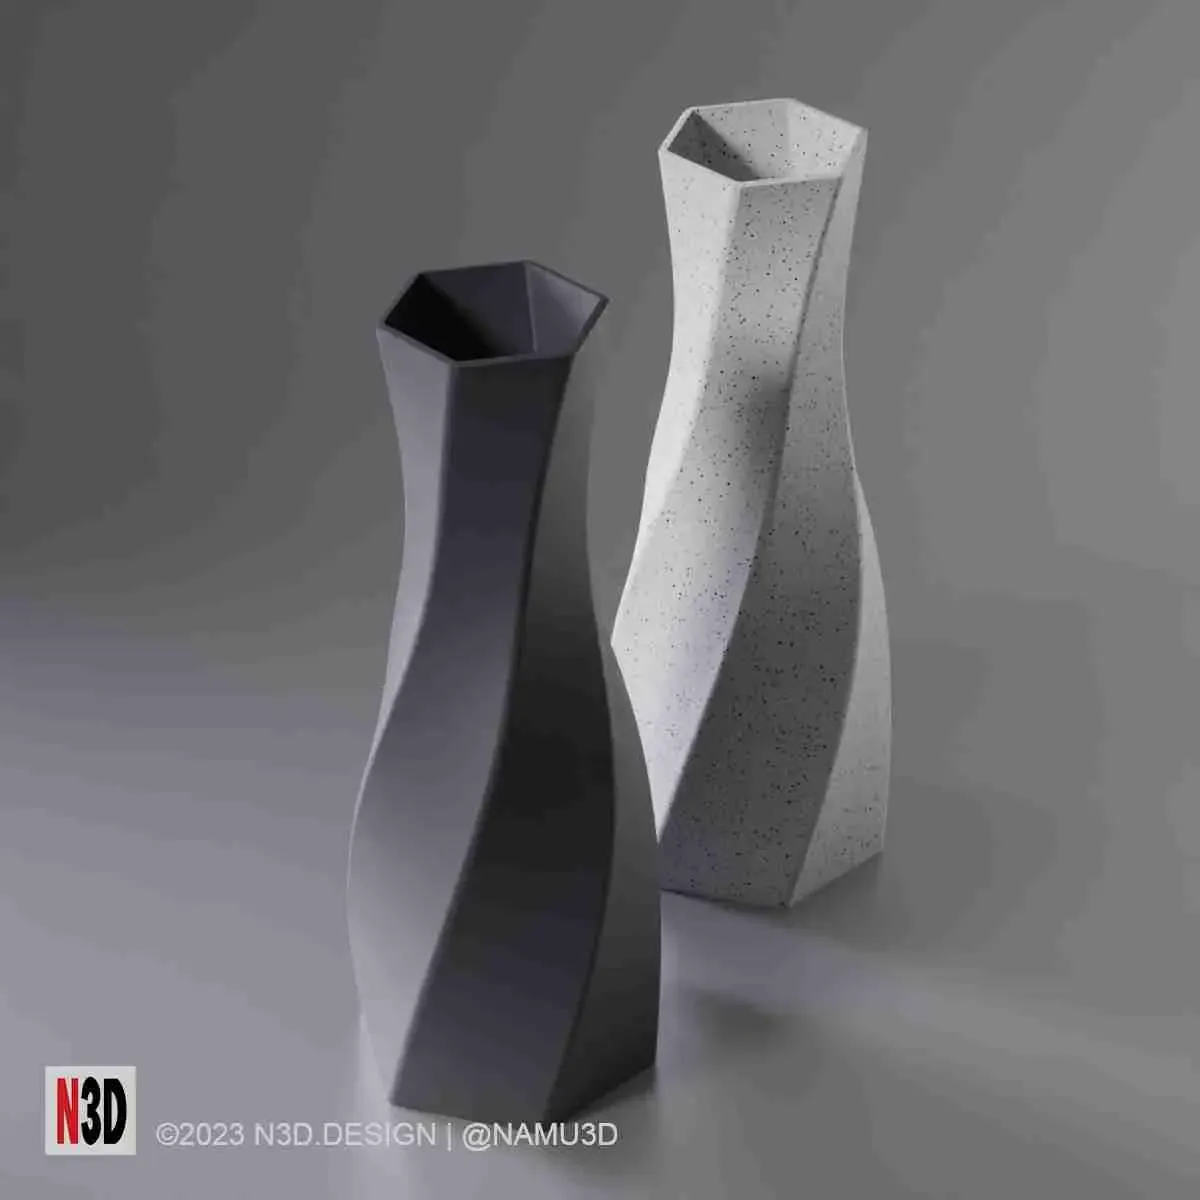 Vase 0031 - Classic twist vase